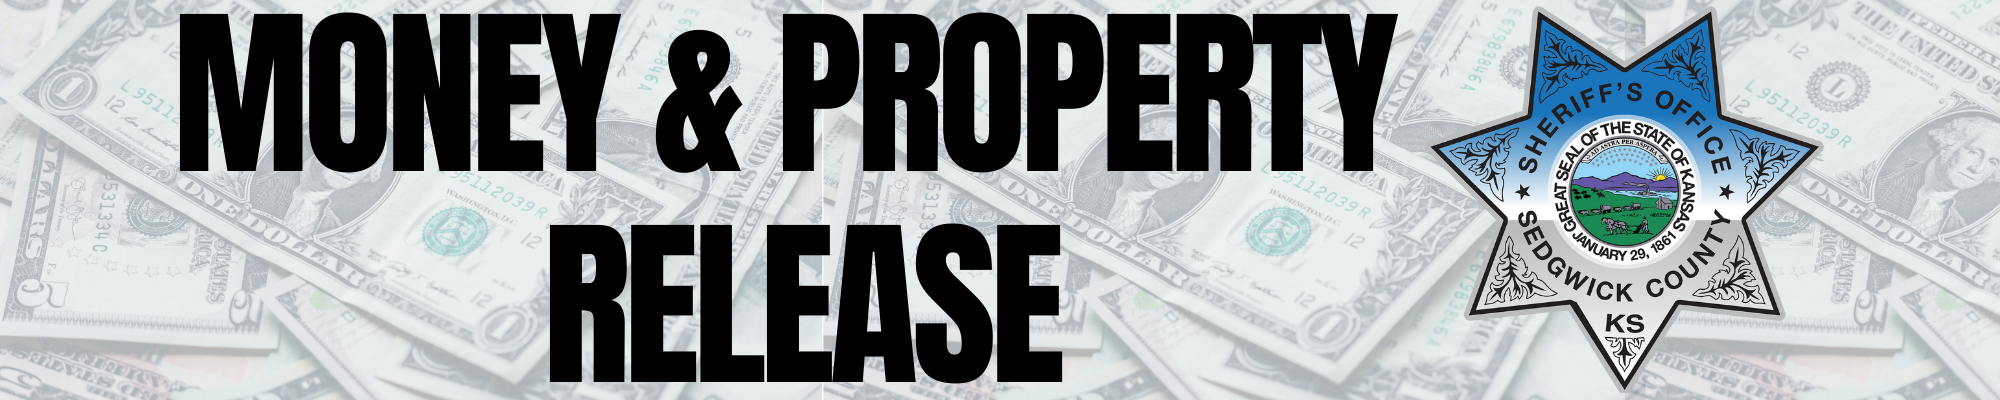 Money & Property Release